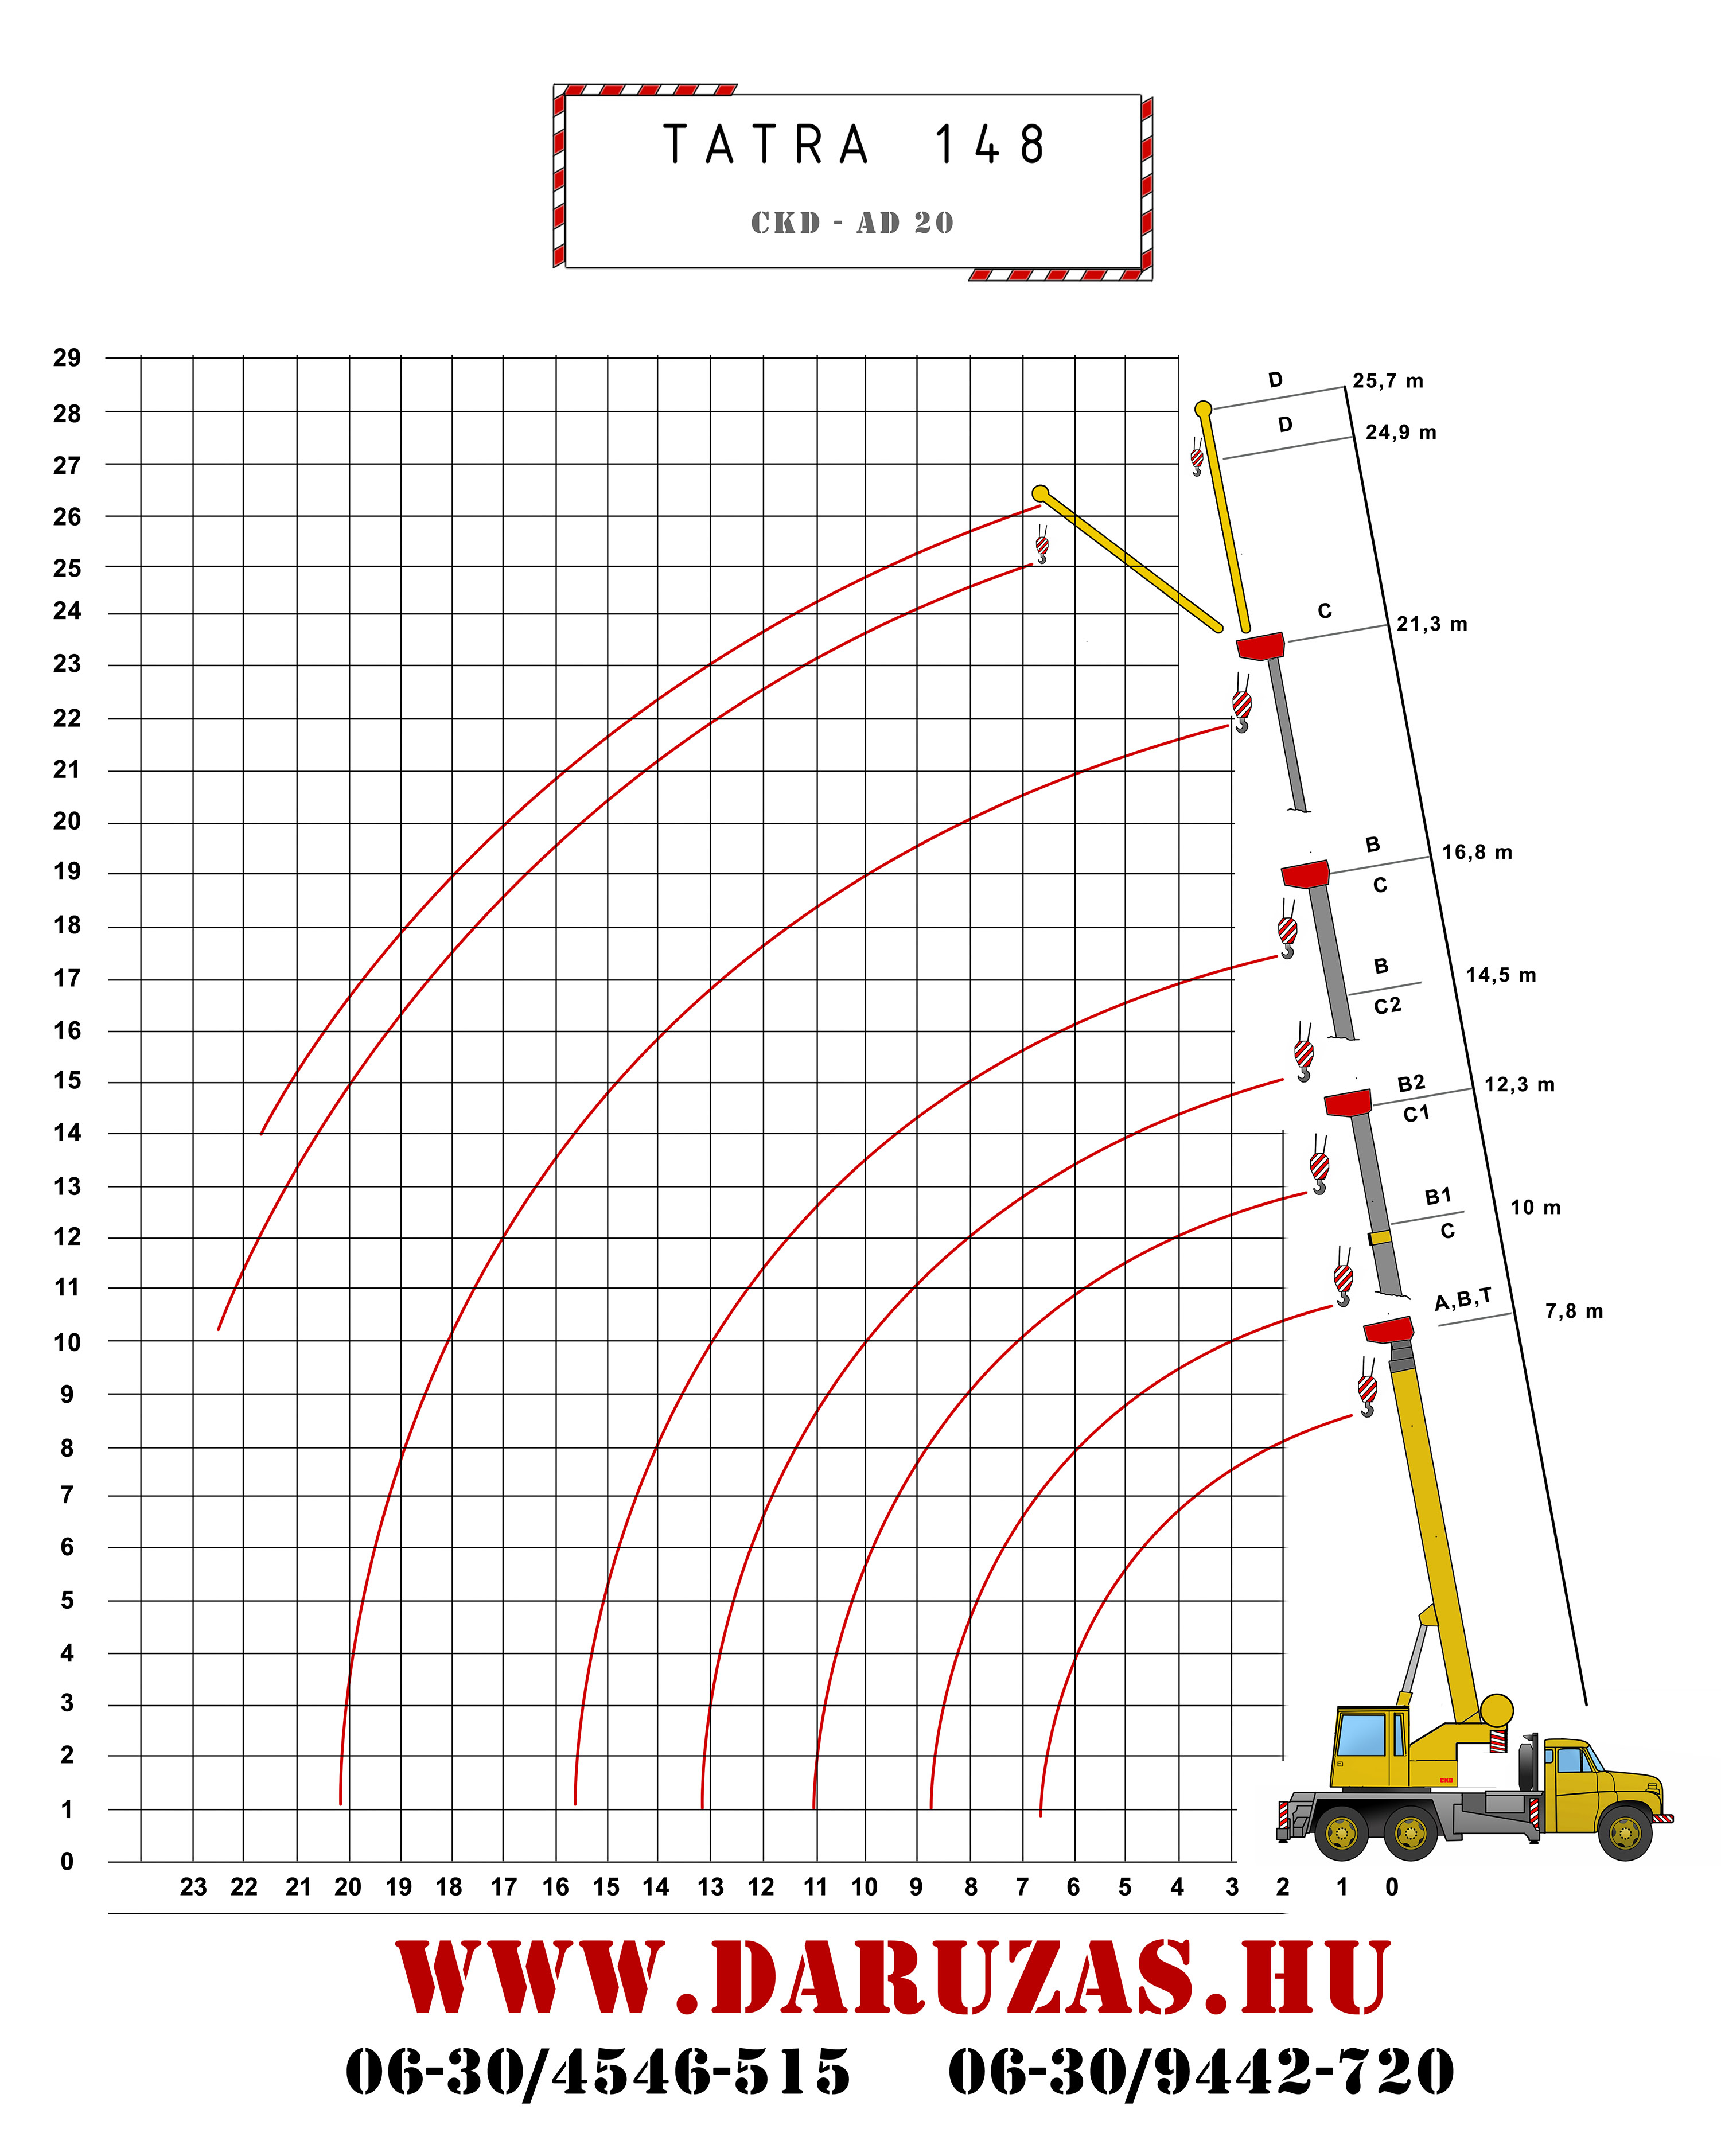 Tatra 148 AD 20 diagram parameters boom gémkinyúlás